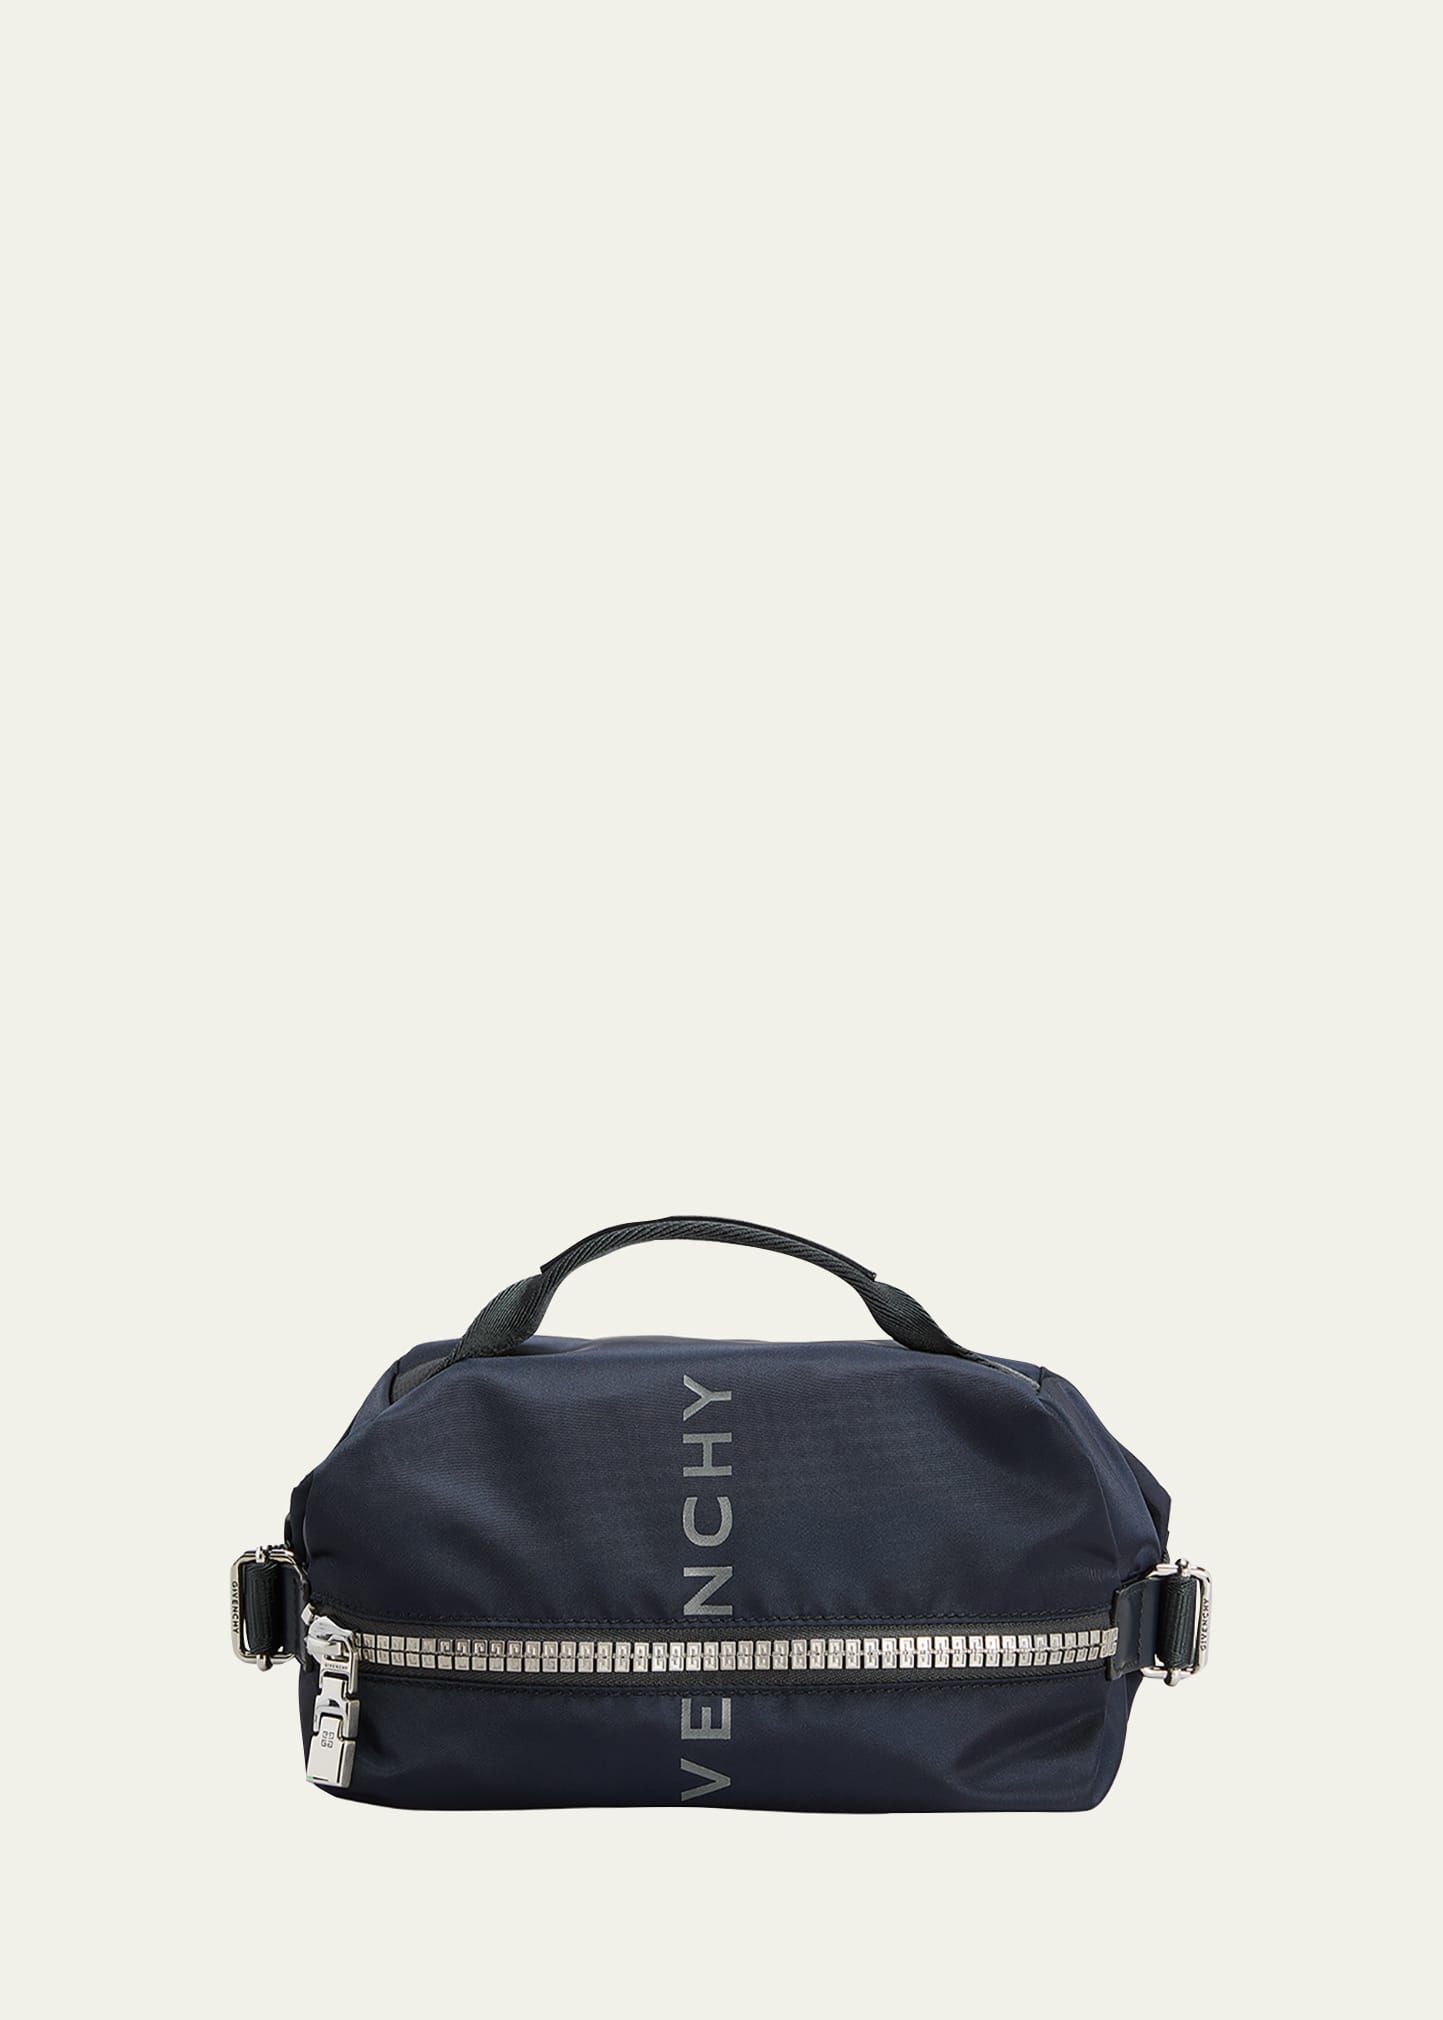 Givenchy Men's G-zip Bumbag 4g Nylon Belt Bag In Black